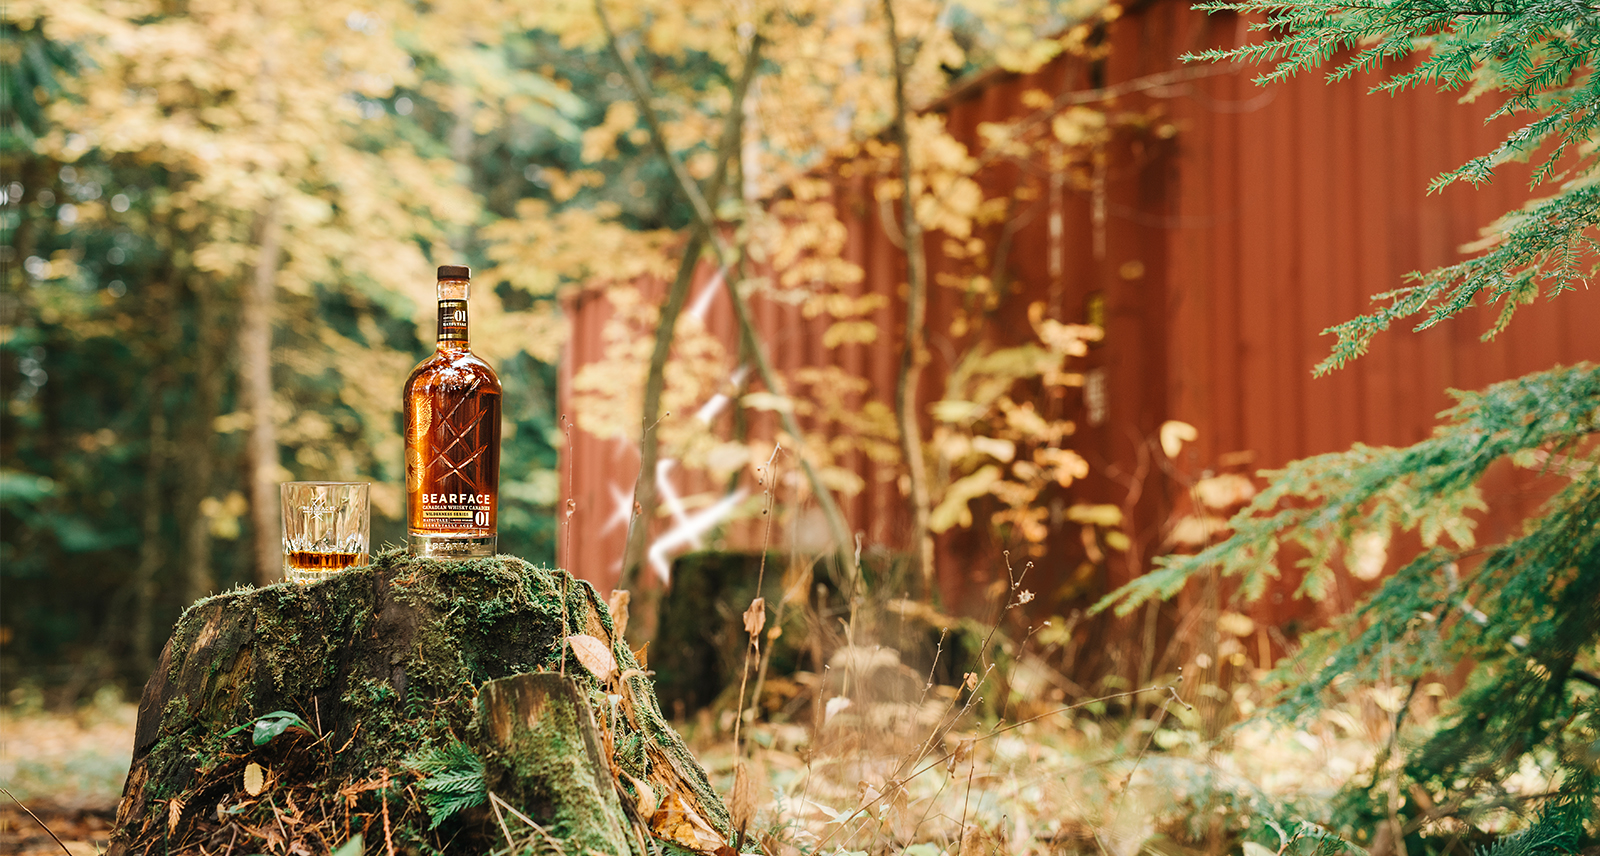 BEARFACE Whisky Wilderness Series Matsutake Release 01